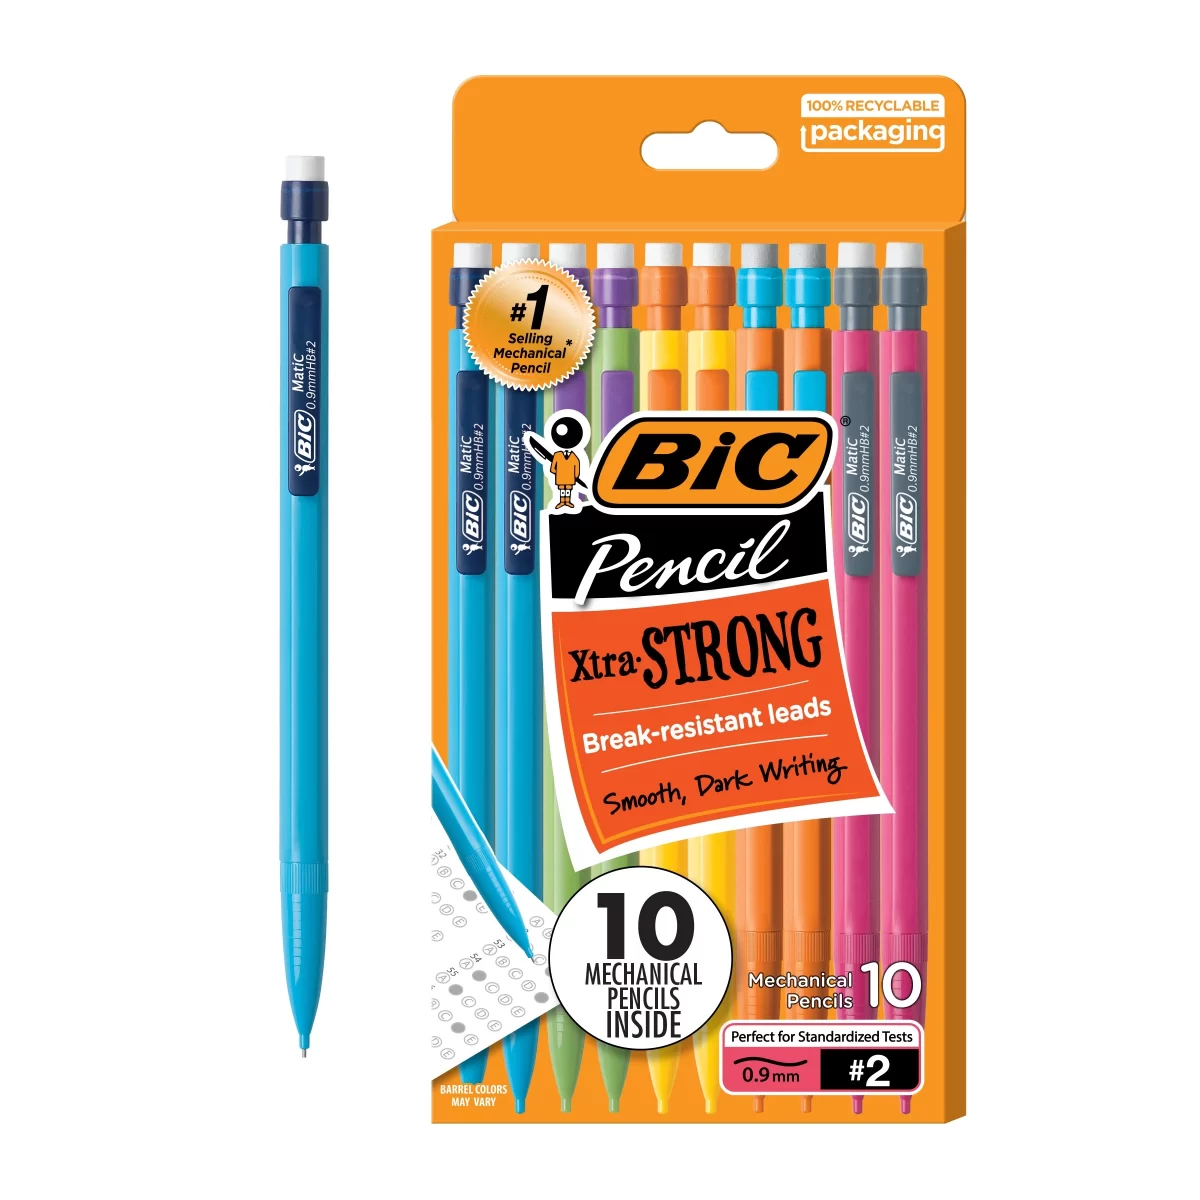 Regular+Pencils+vs+Mechanical+Pencils